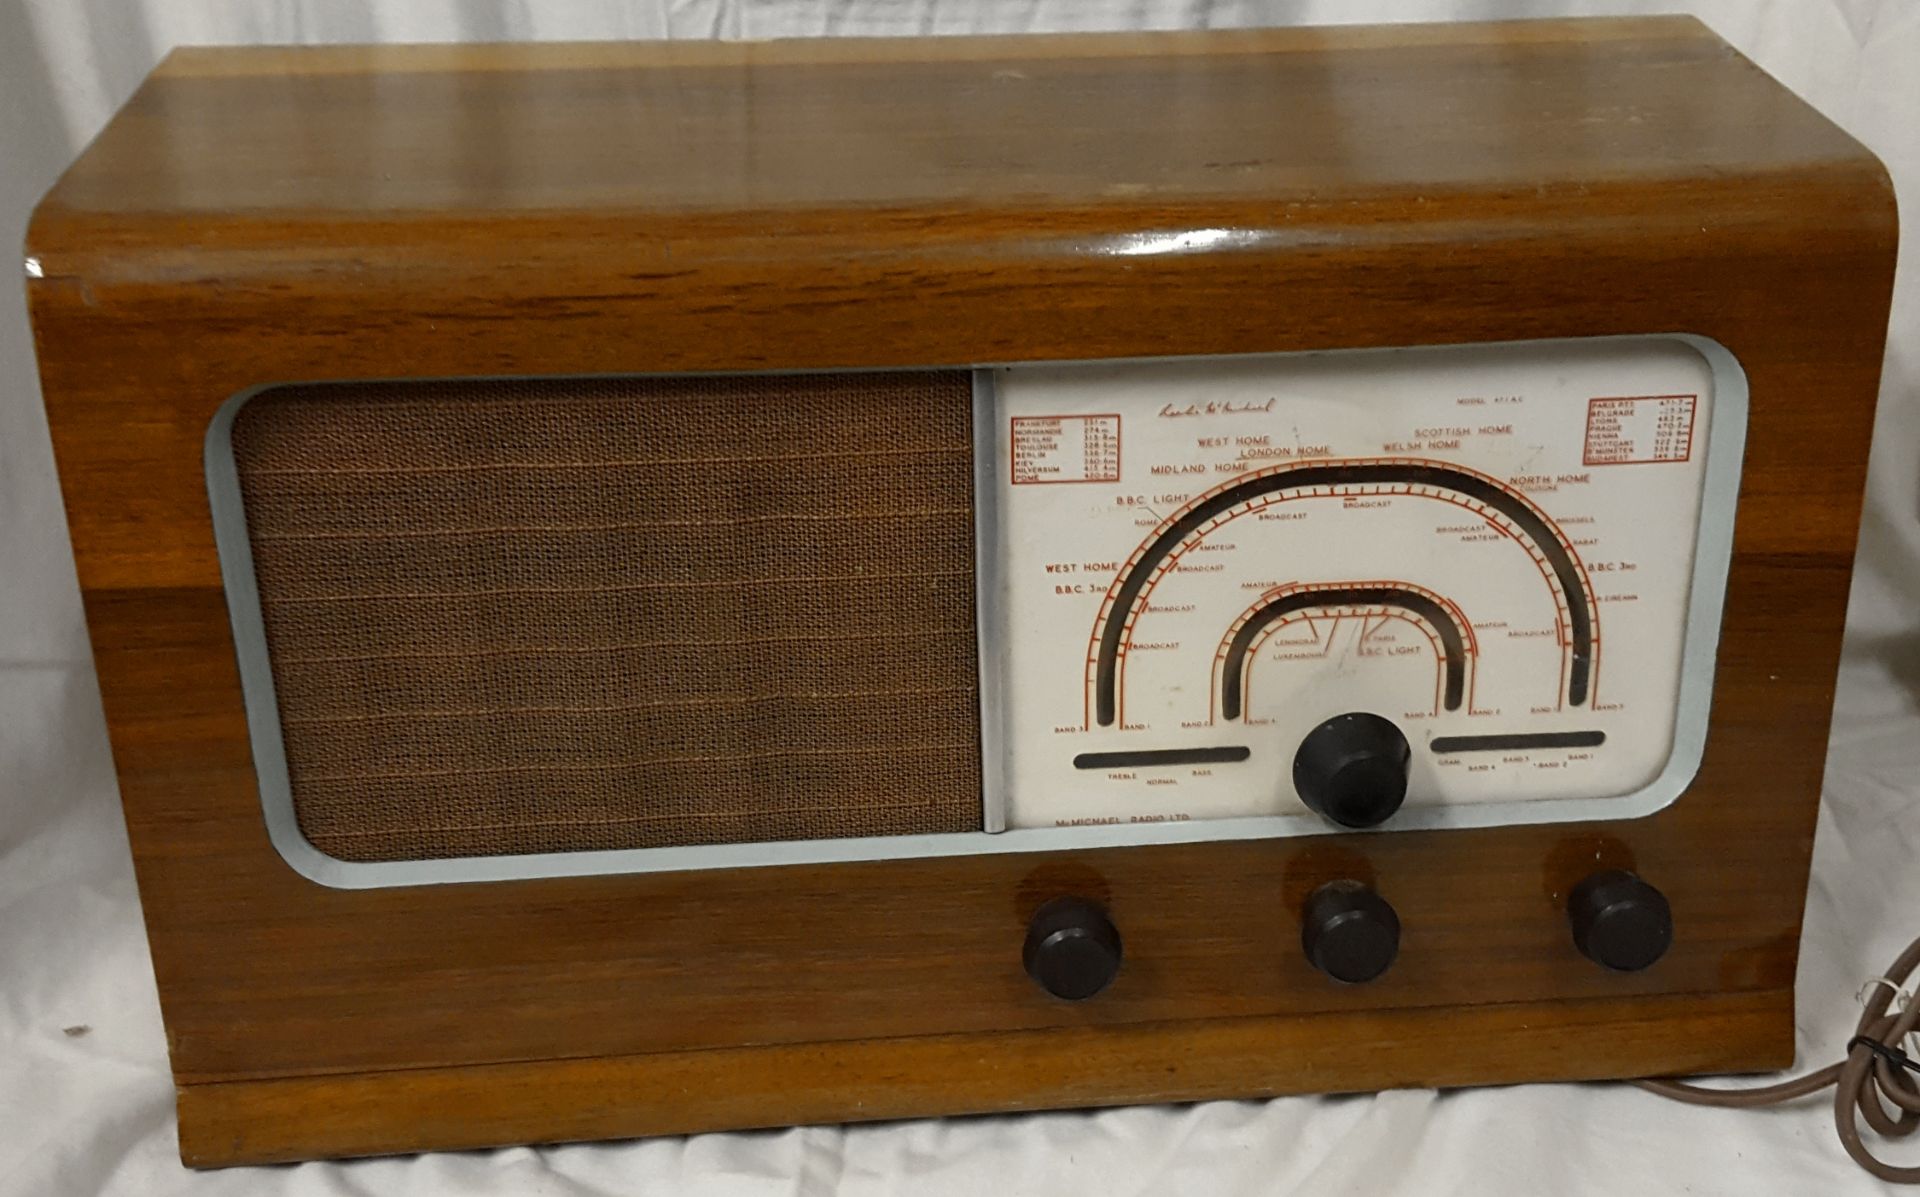 Antique Vintage Retro McMichael Wireless Radio Similar to Model 471U